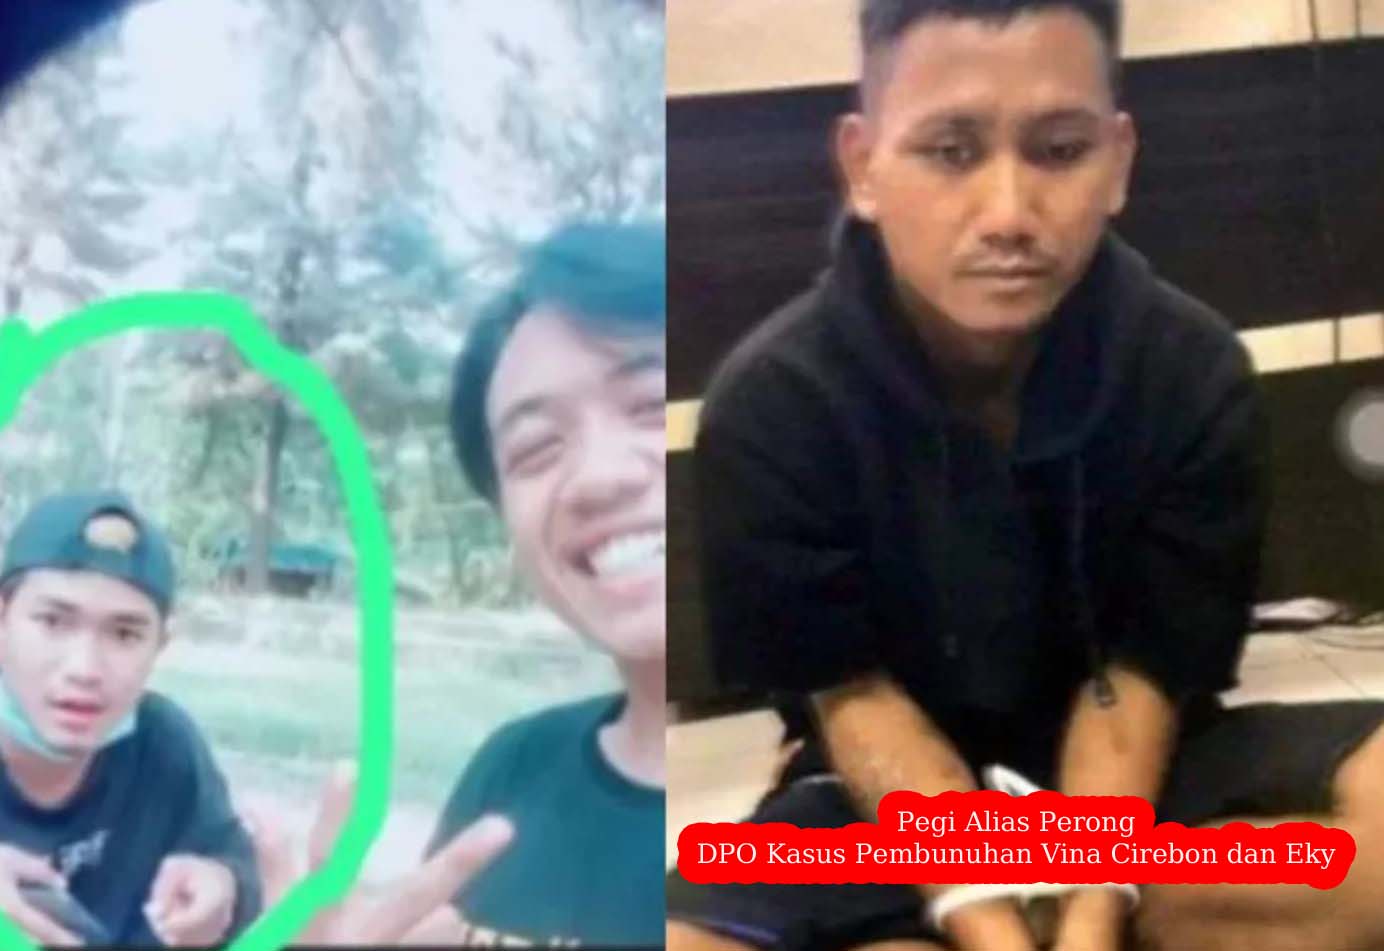 Semua Orang Terkejut, 5 Fakta ini Terungkap Setelah ditangkapnya Pegi Alias Perong Atas Kasus Vina Cirebon